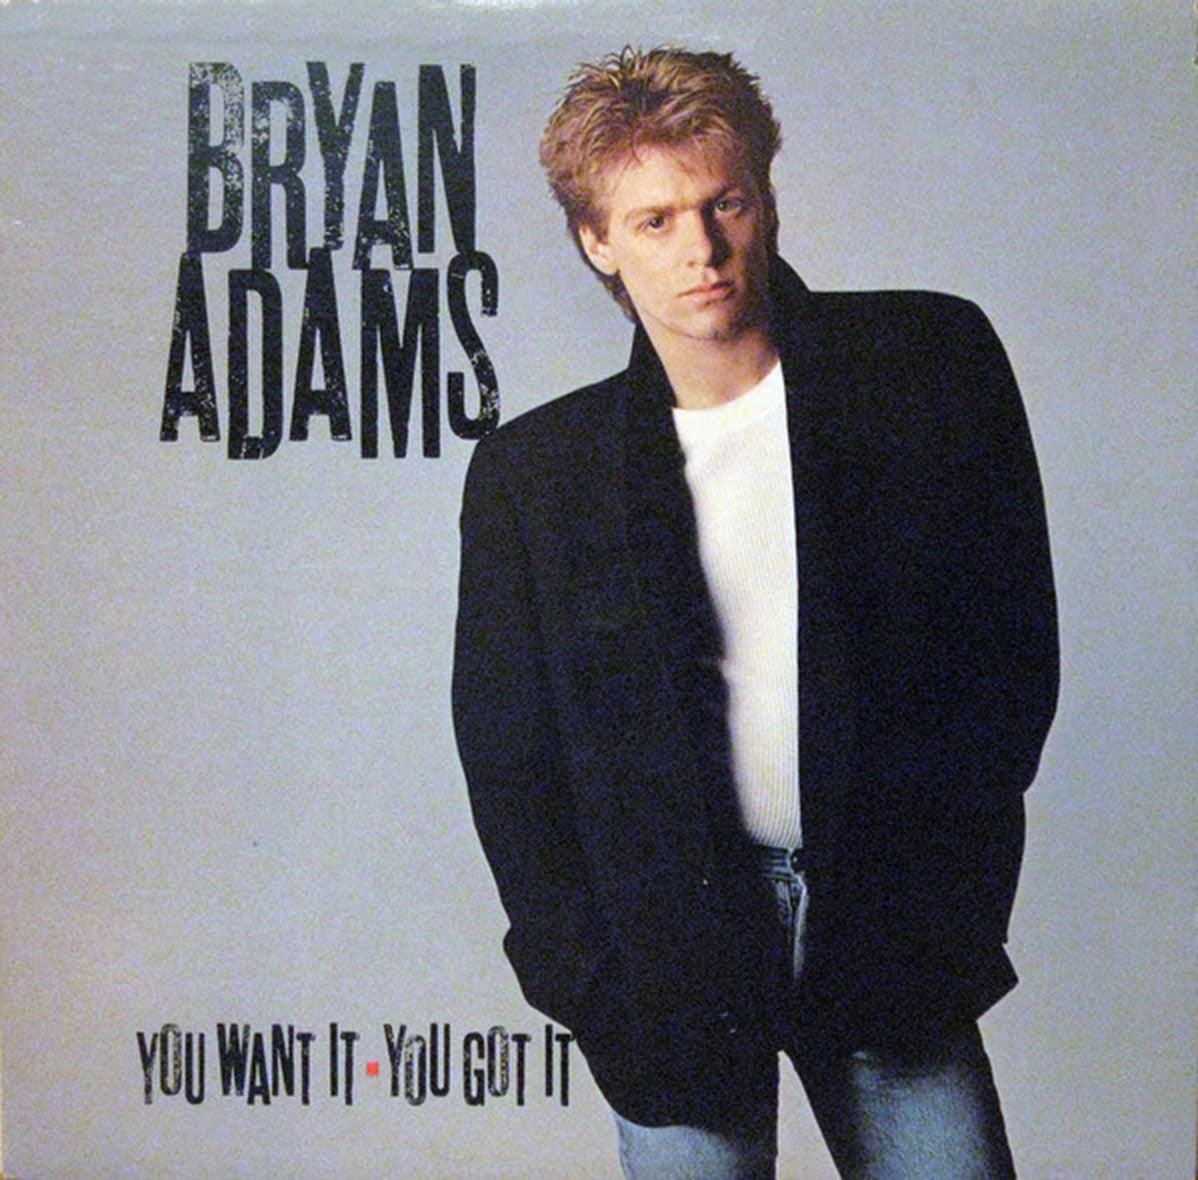 Bryan Adams ‎– You Want It, You Got It